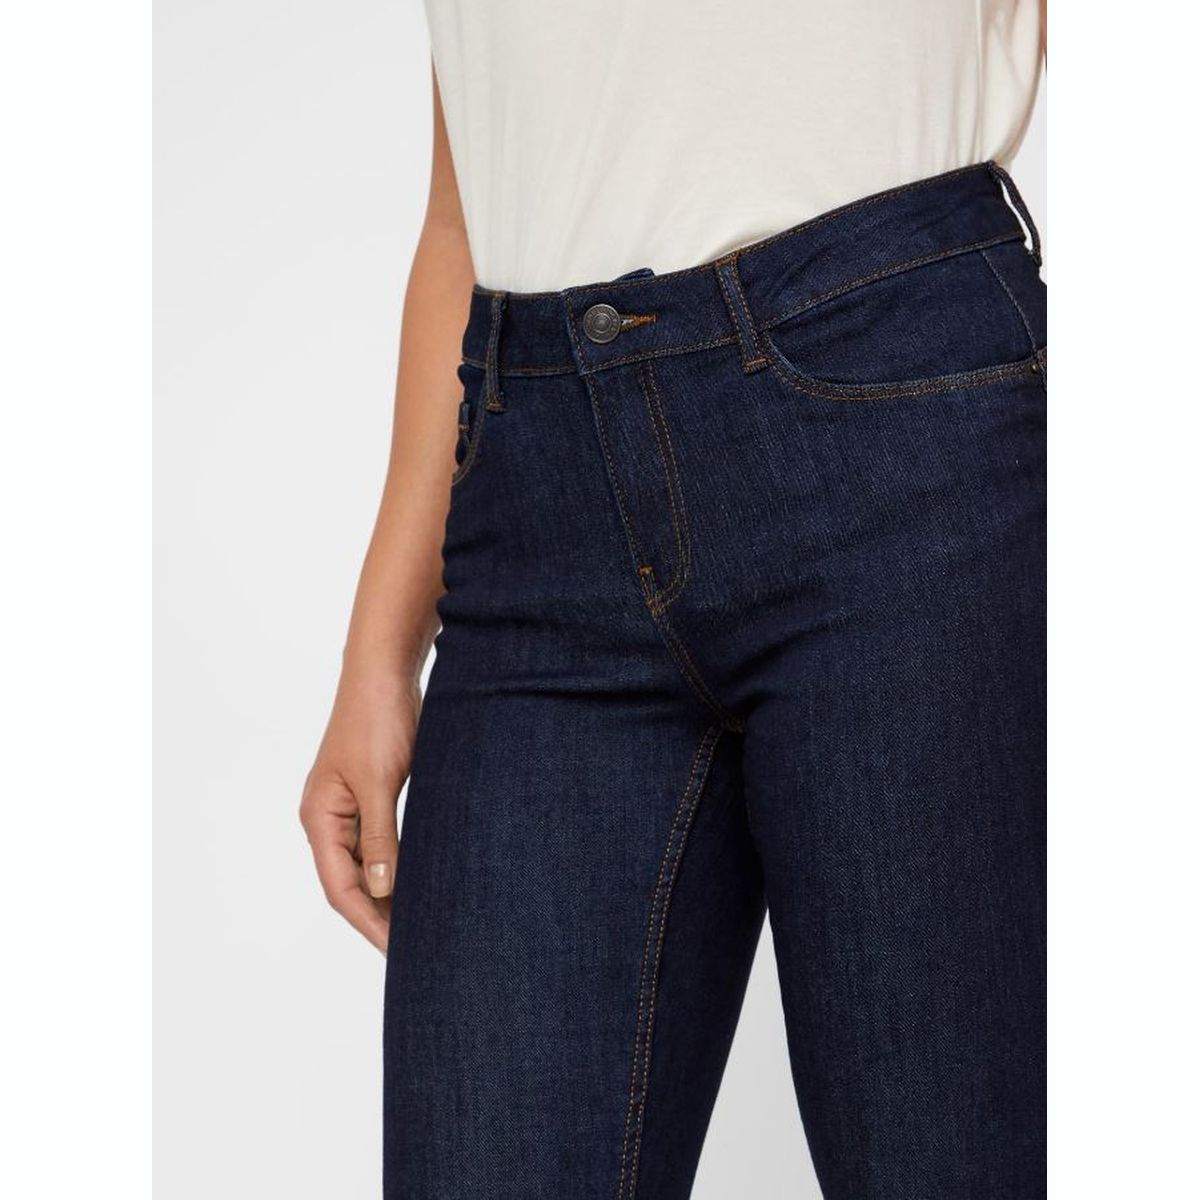 Pantalón Jeans Ajustado para Dama-10183948